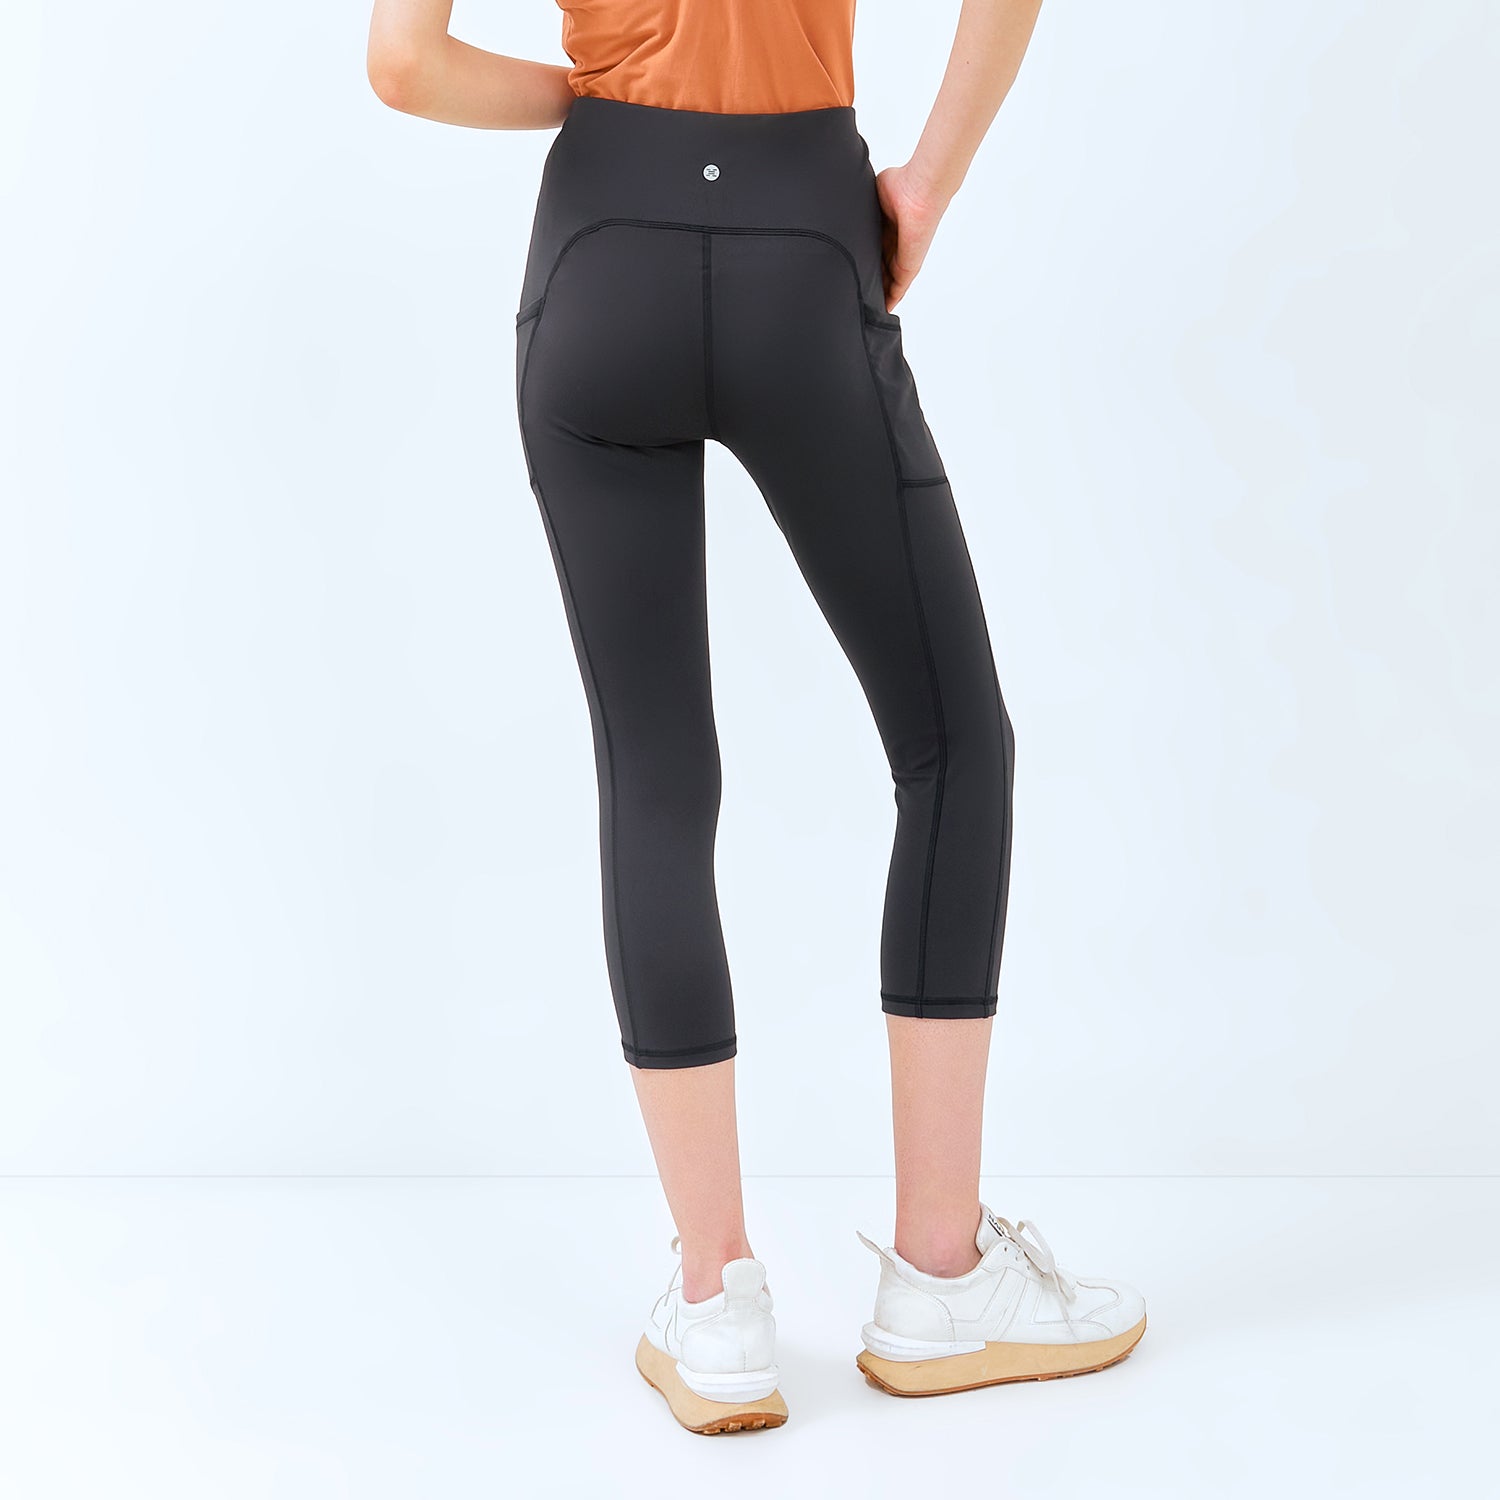 Suga Legging Sport - Celana Olahraga Wanita [MYBXL 08]